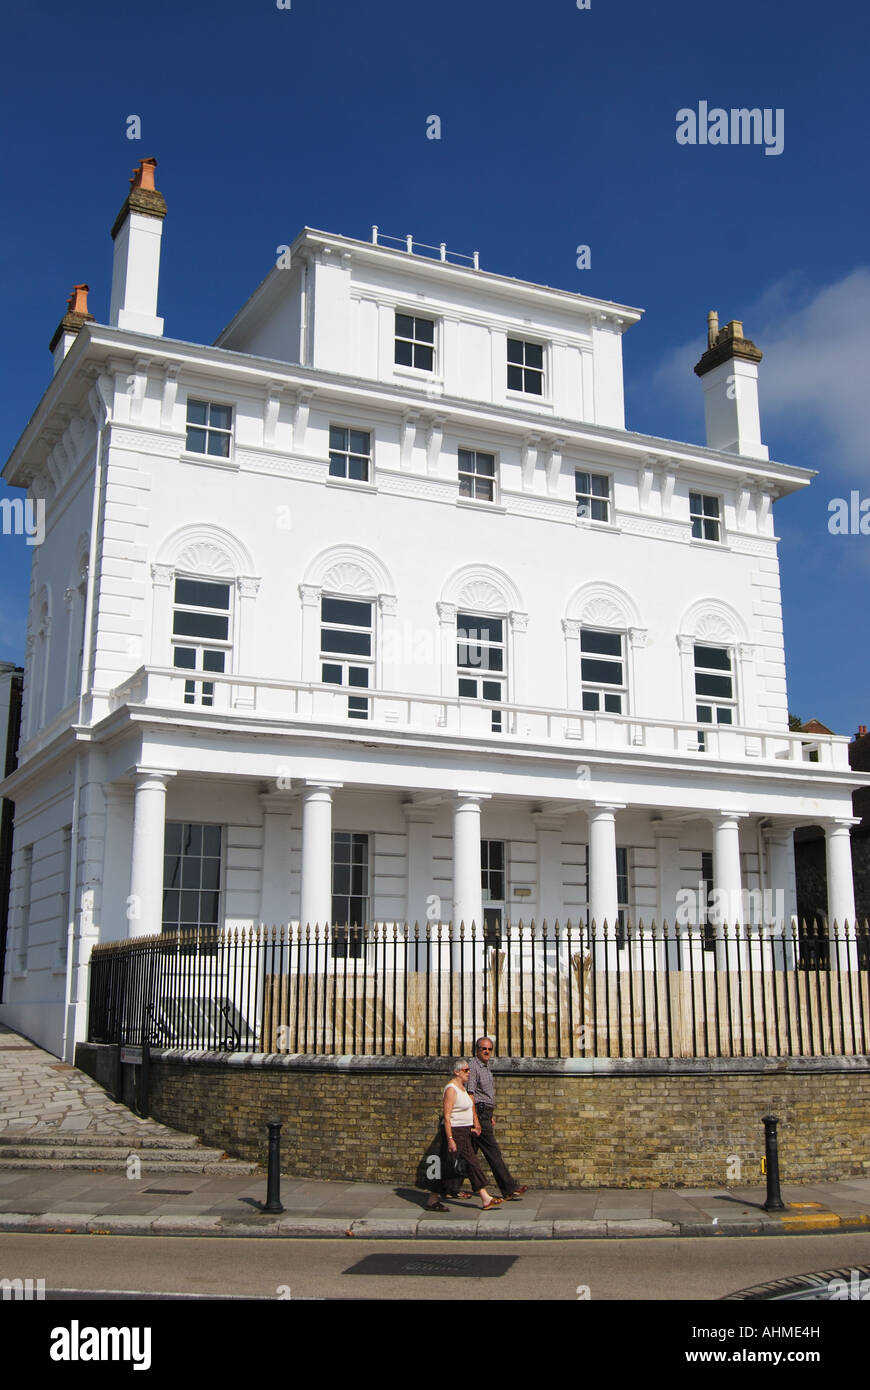 Solent House, Bugle Street, Southampton, Hampshire, Angleterre, Royaume-Uni Banque D'Images